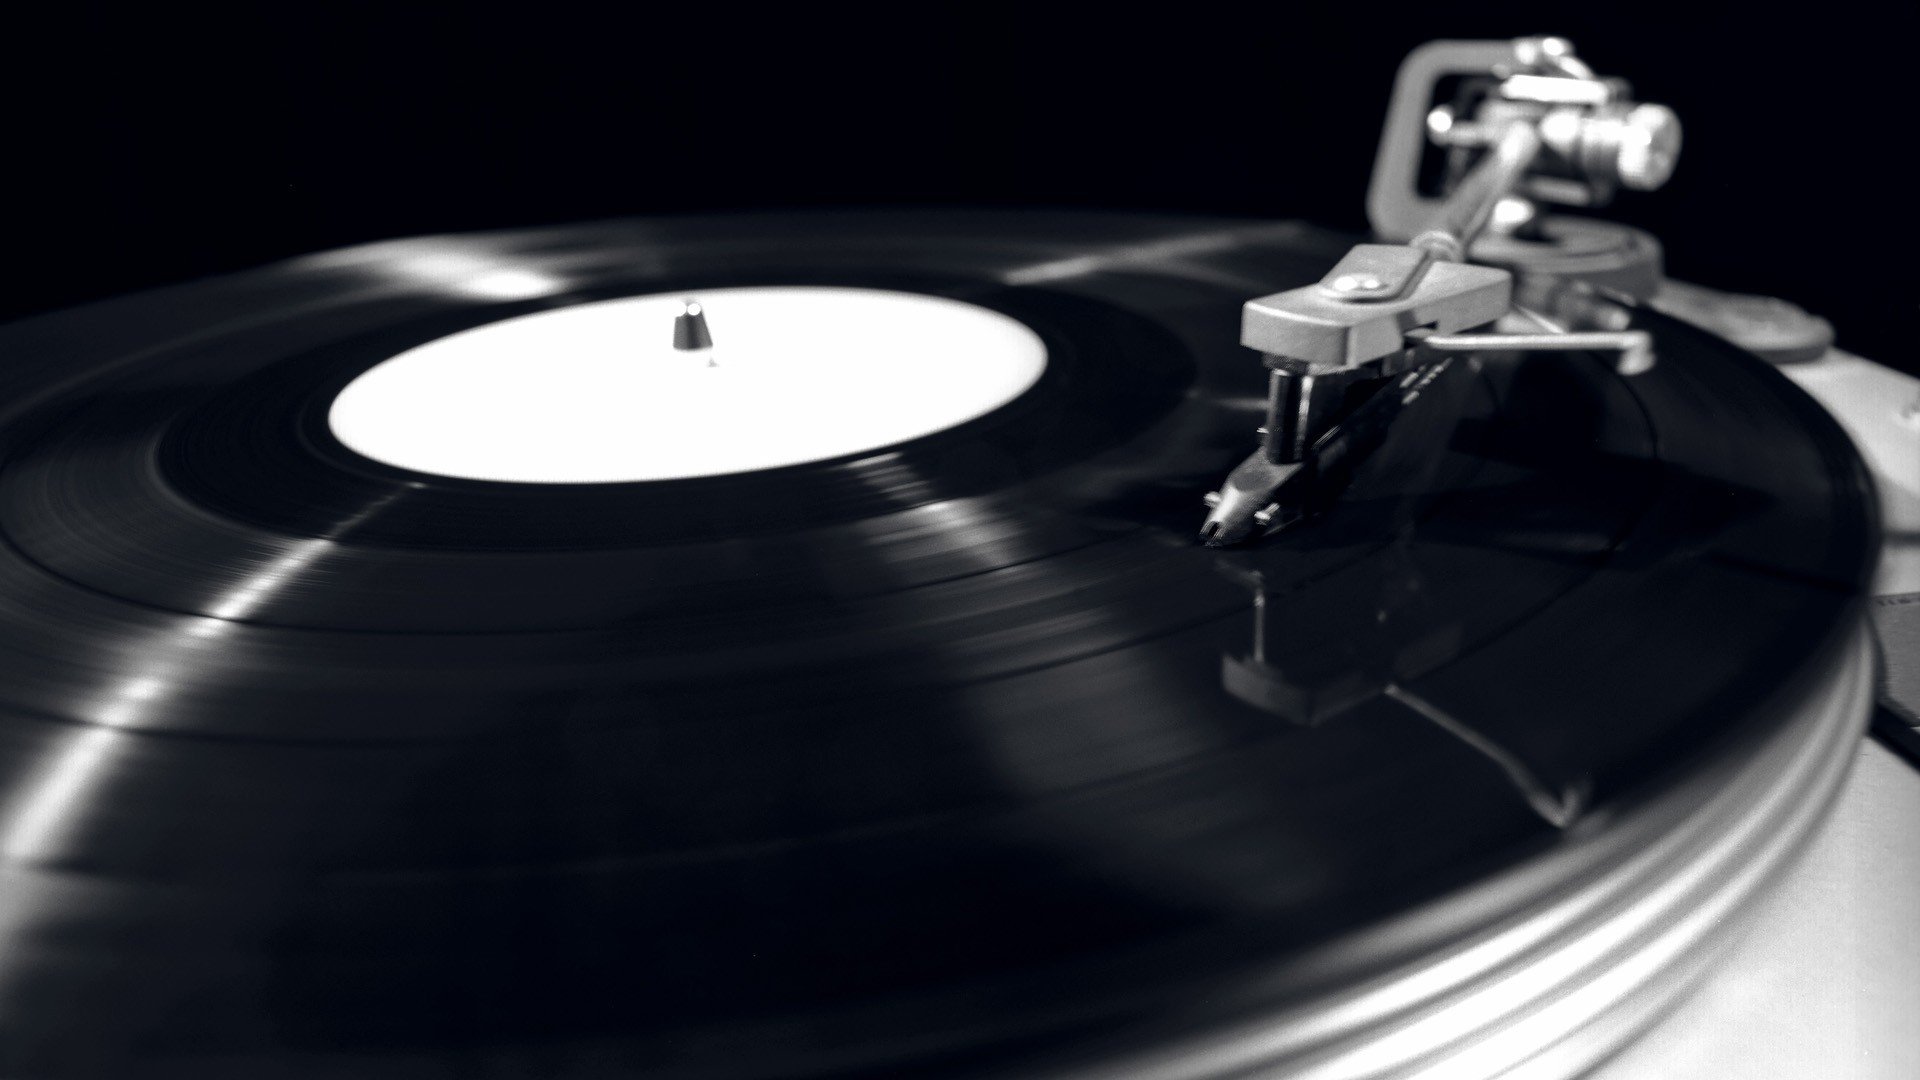 100+ Free Gramophone & Vinyl Images - Pixabay